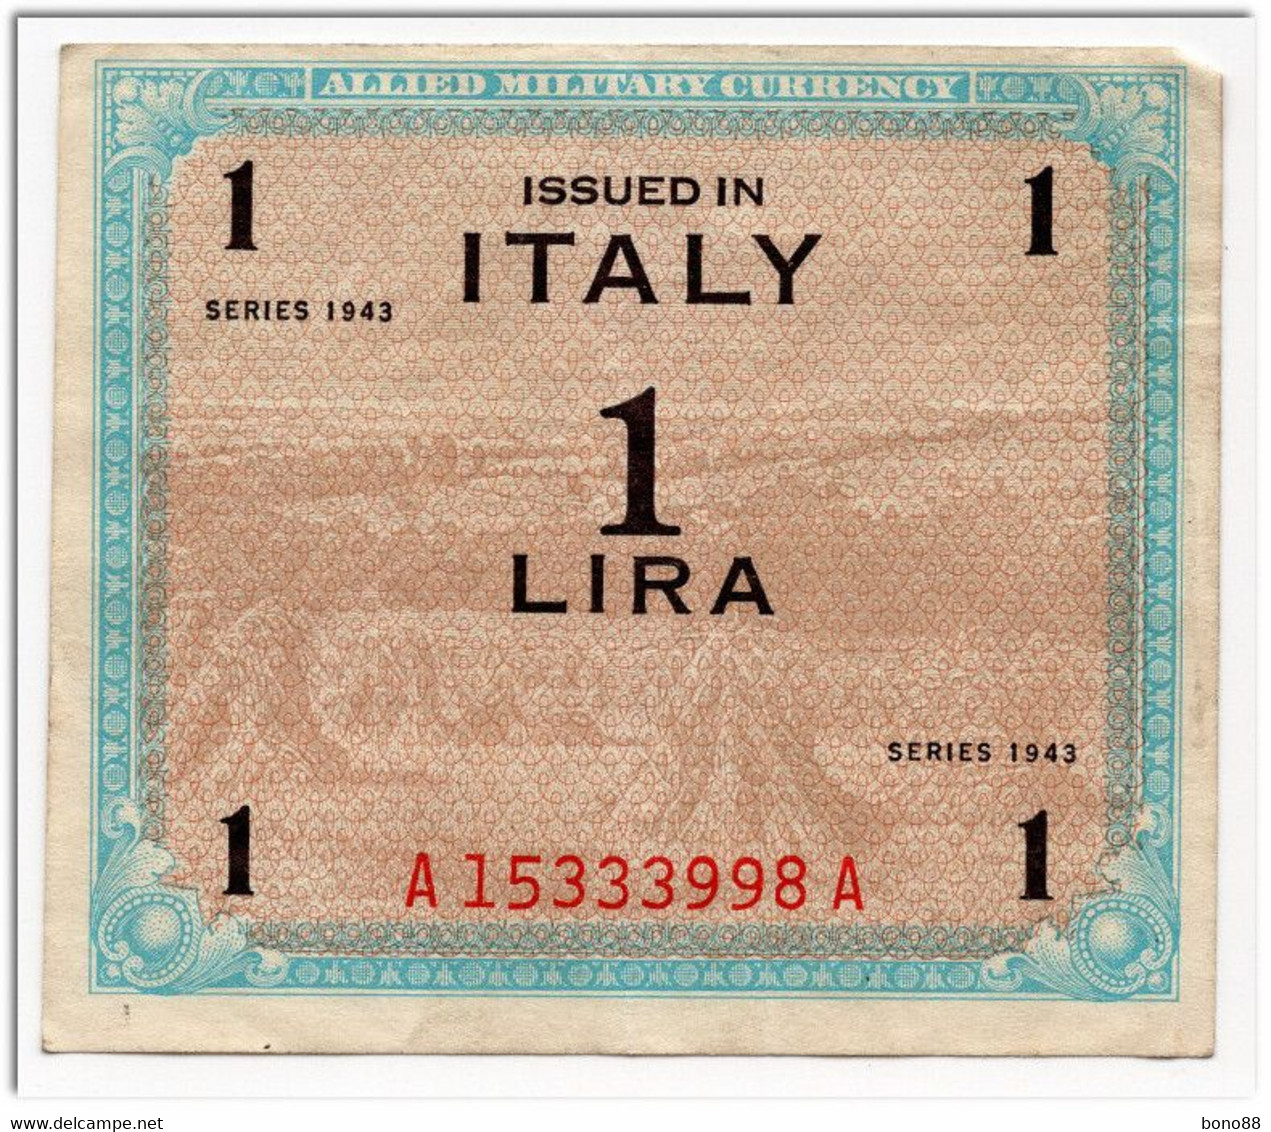 ITALY,ALLIED MILITARY CURRENCY,1 LIRE,1943,P.M10,VF - Geallieerde Bezetting Tweede Wereldoorlog